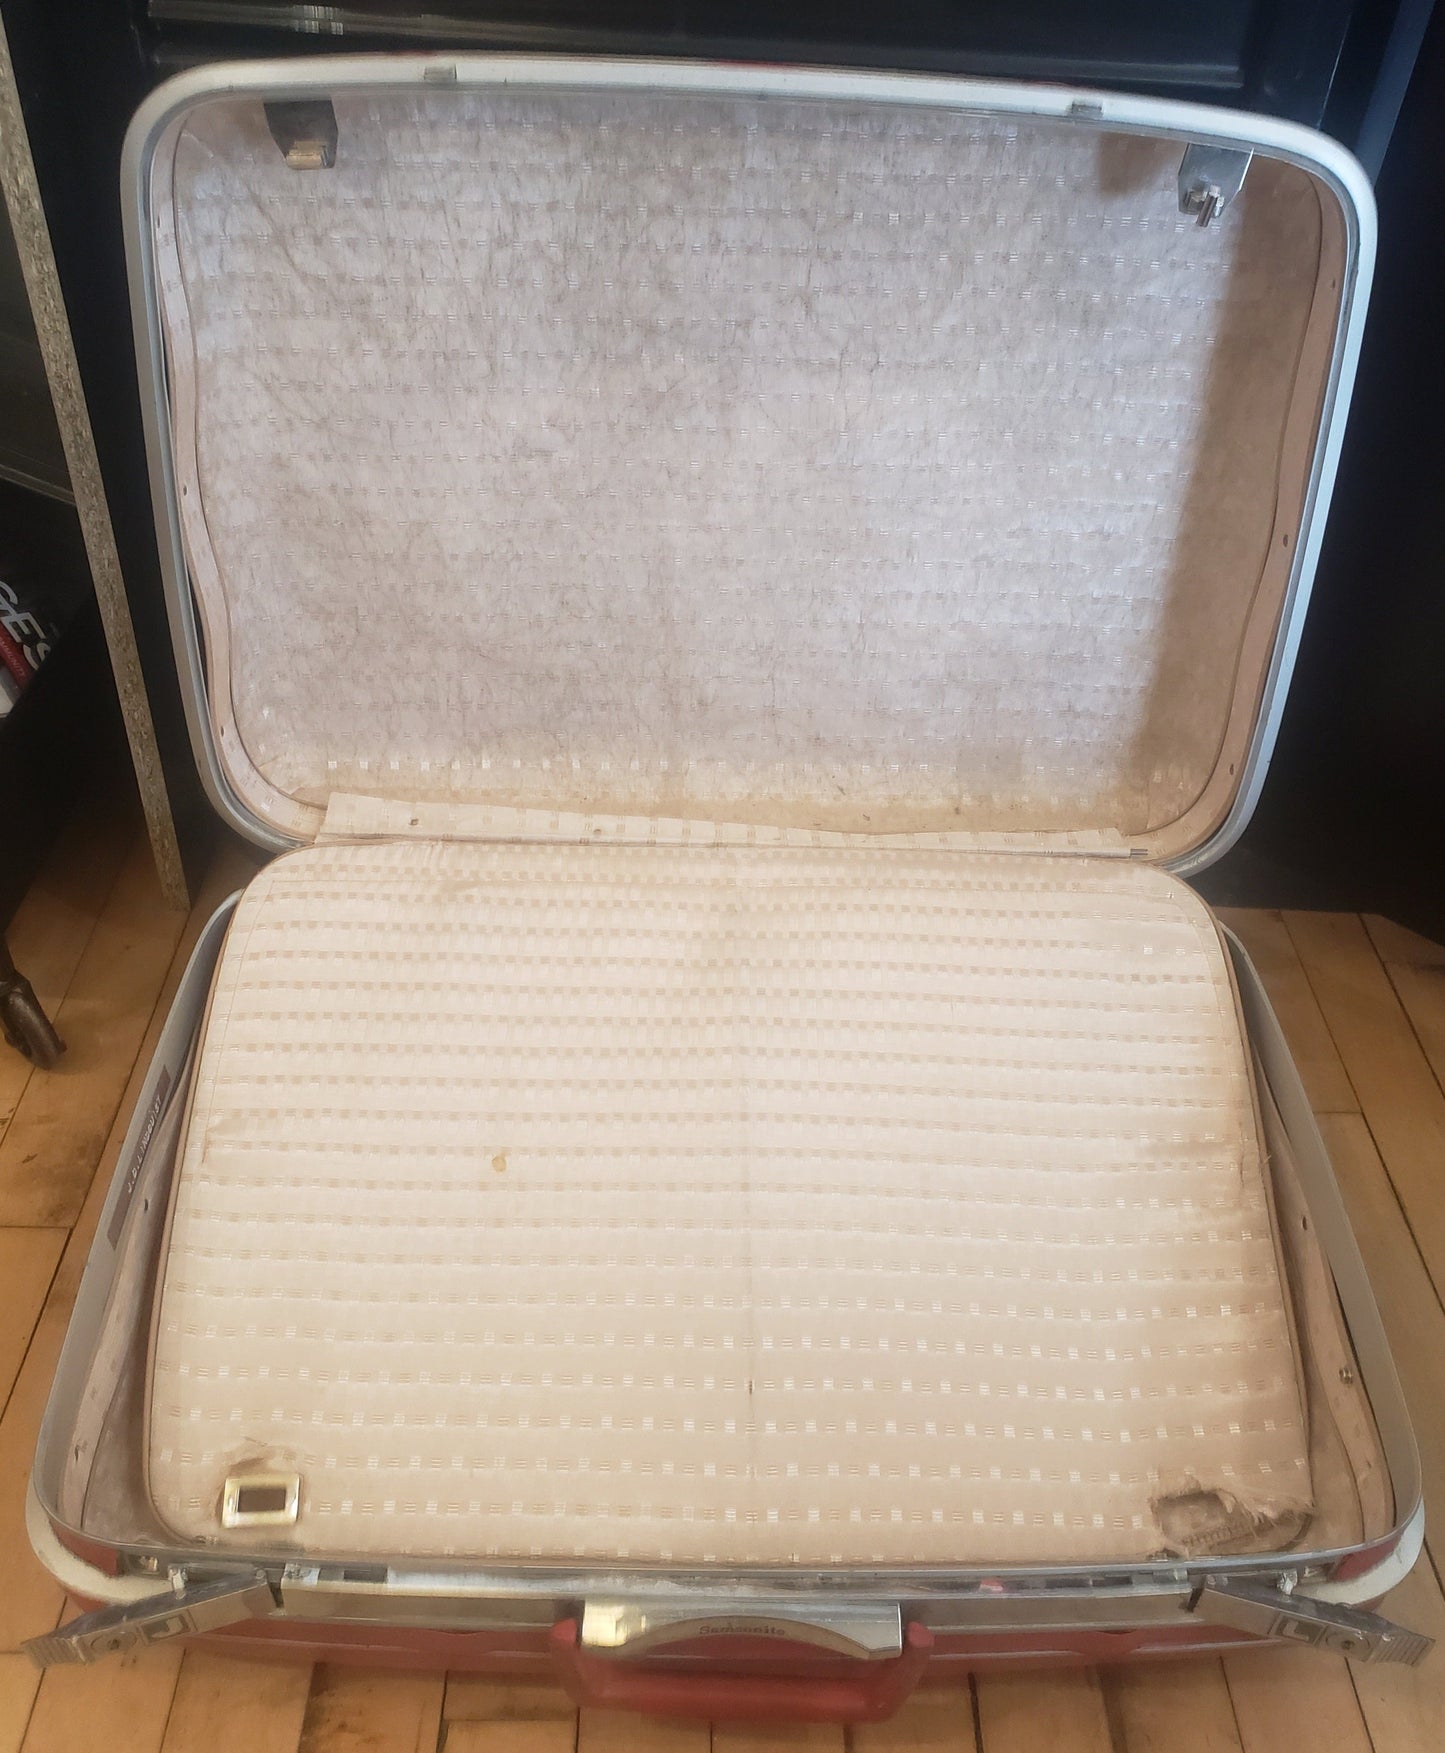 Red Samsonite Hard  Suitcase Set